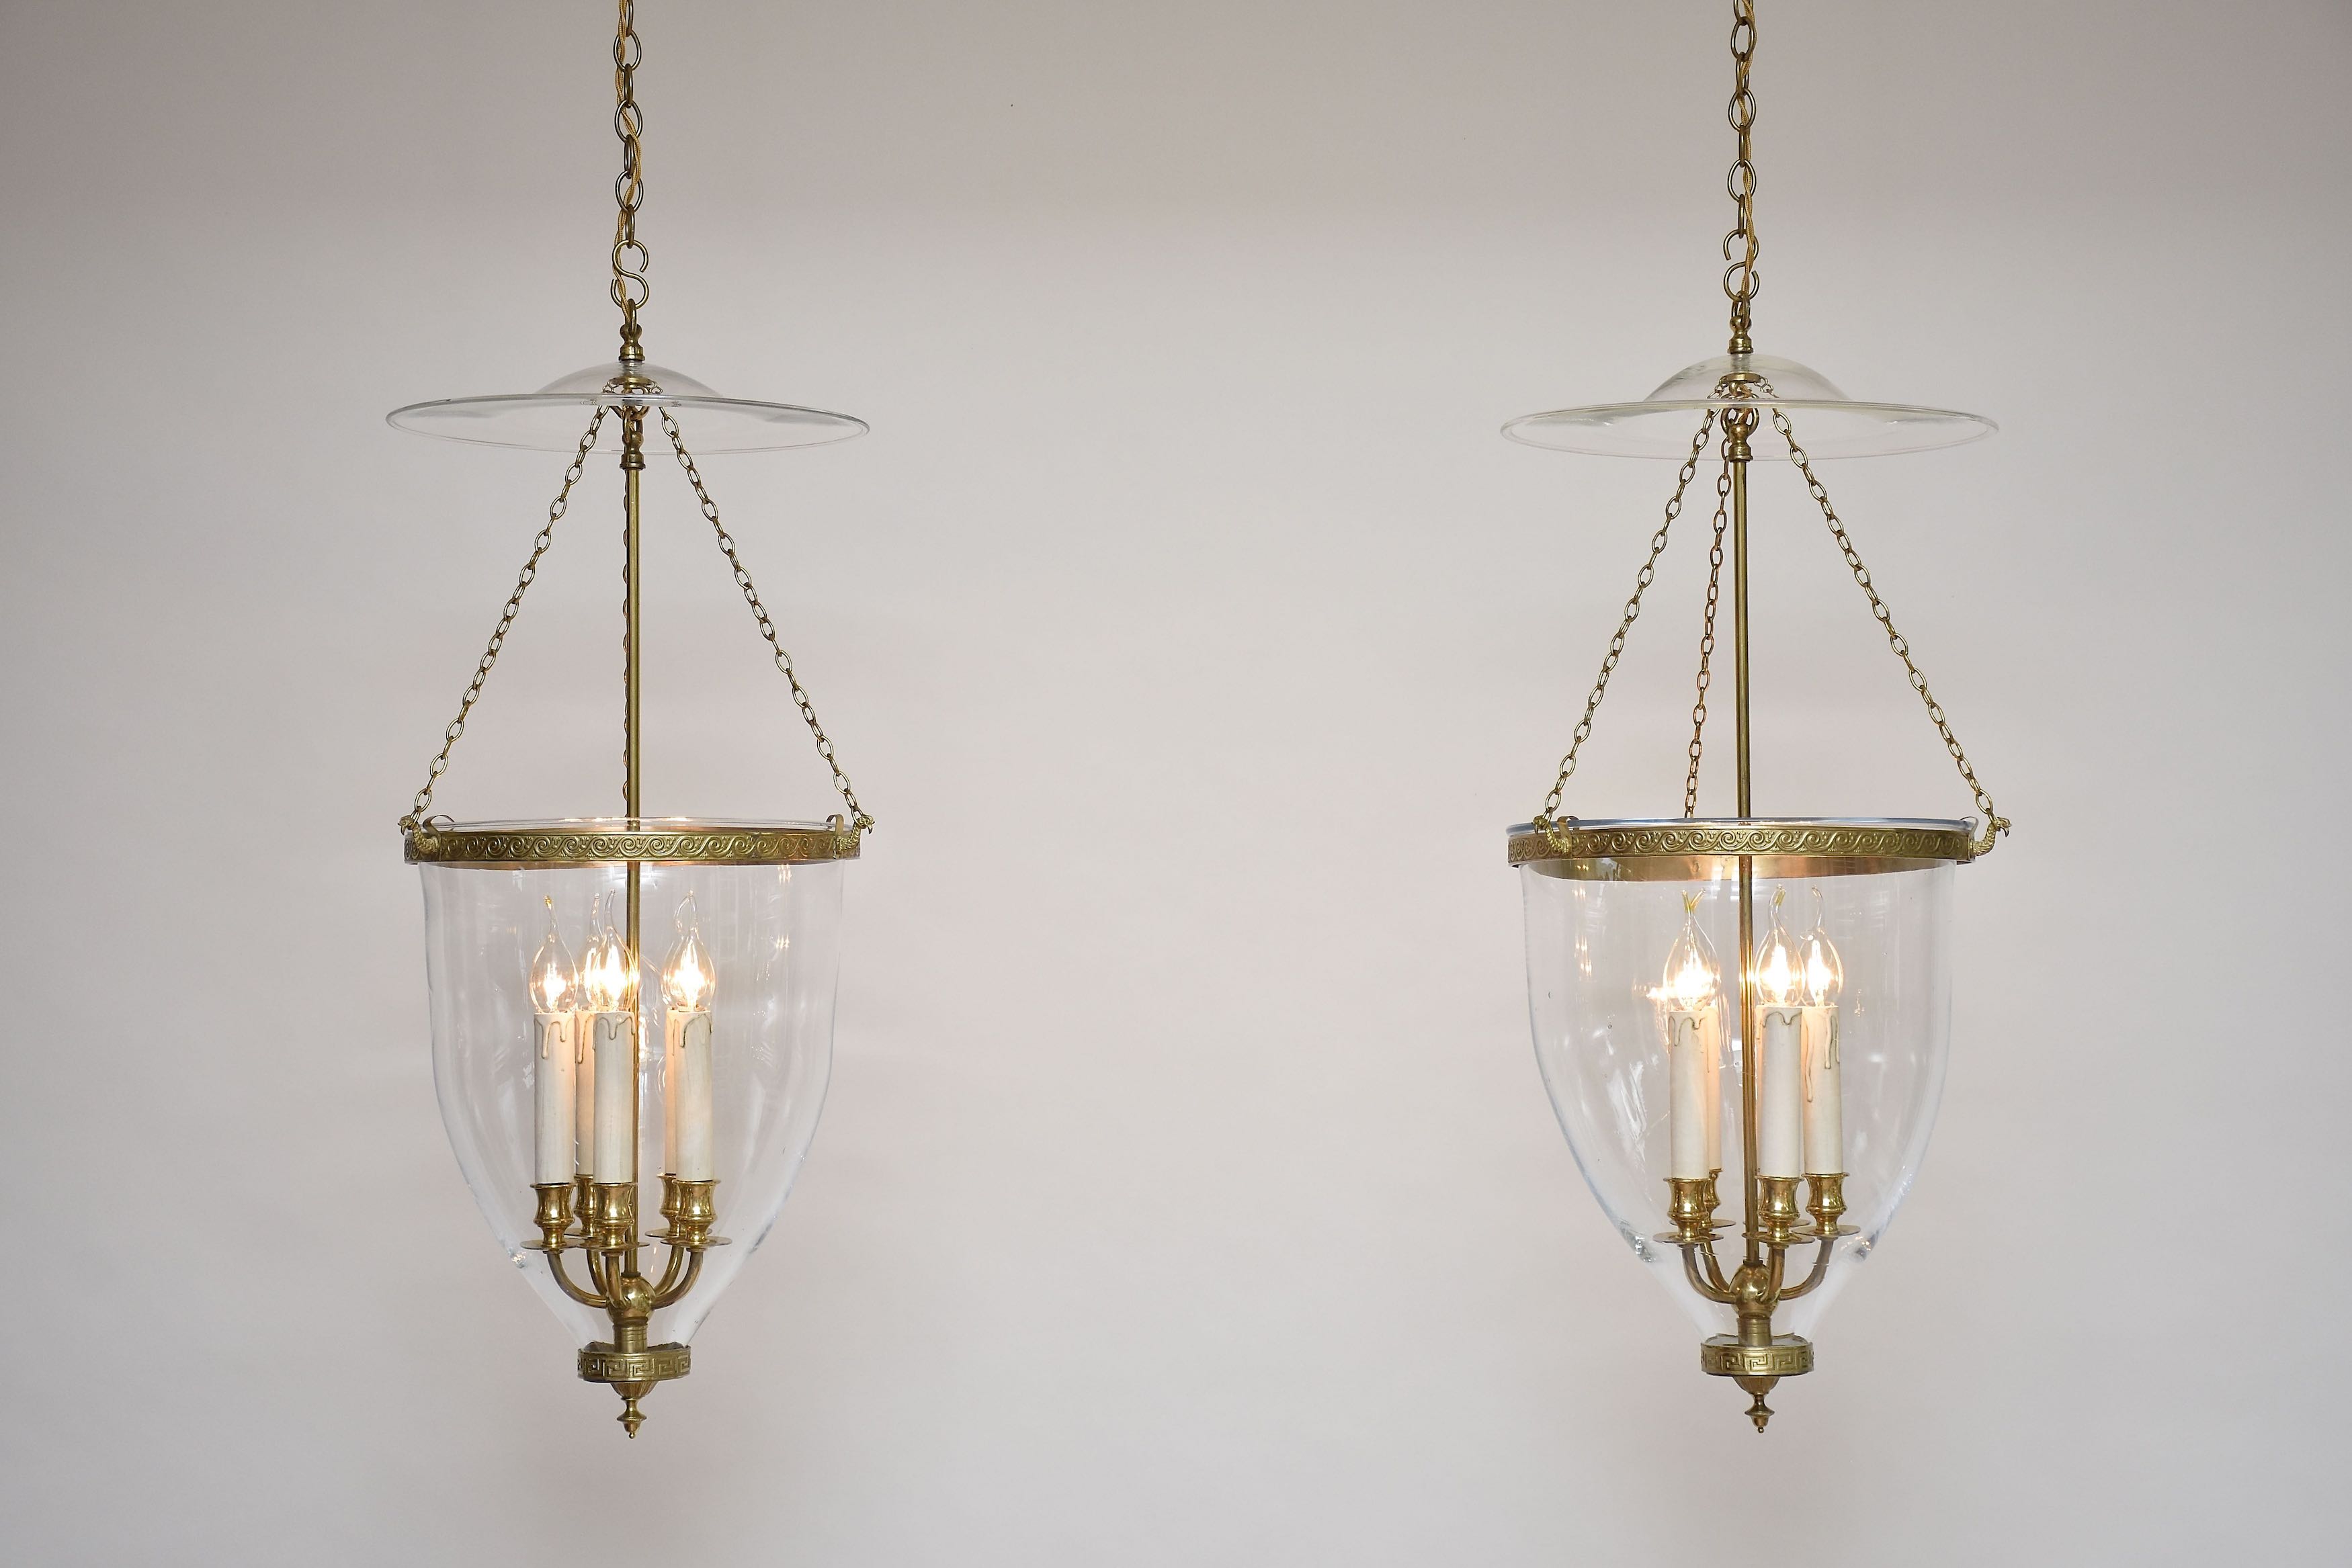 Pair of gilt brass and glass identical lanterns